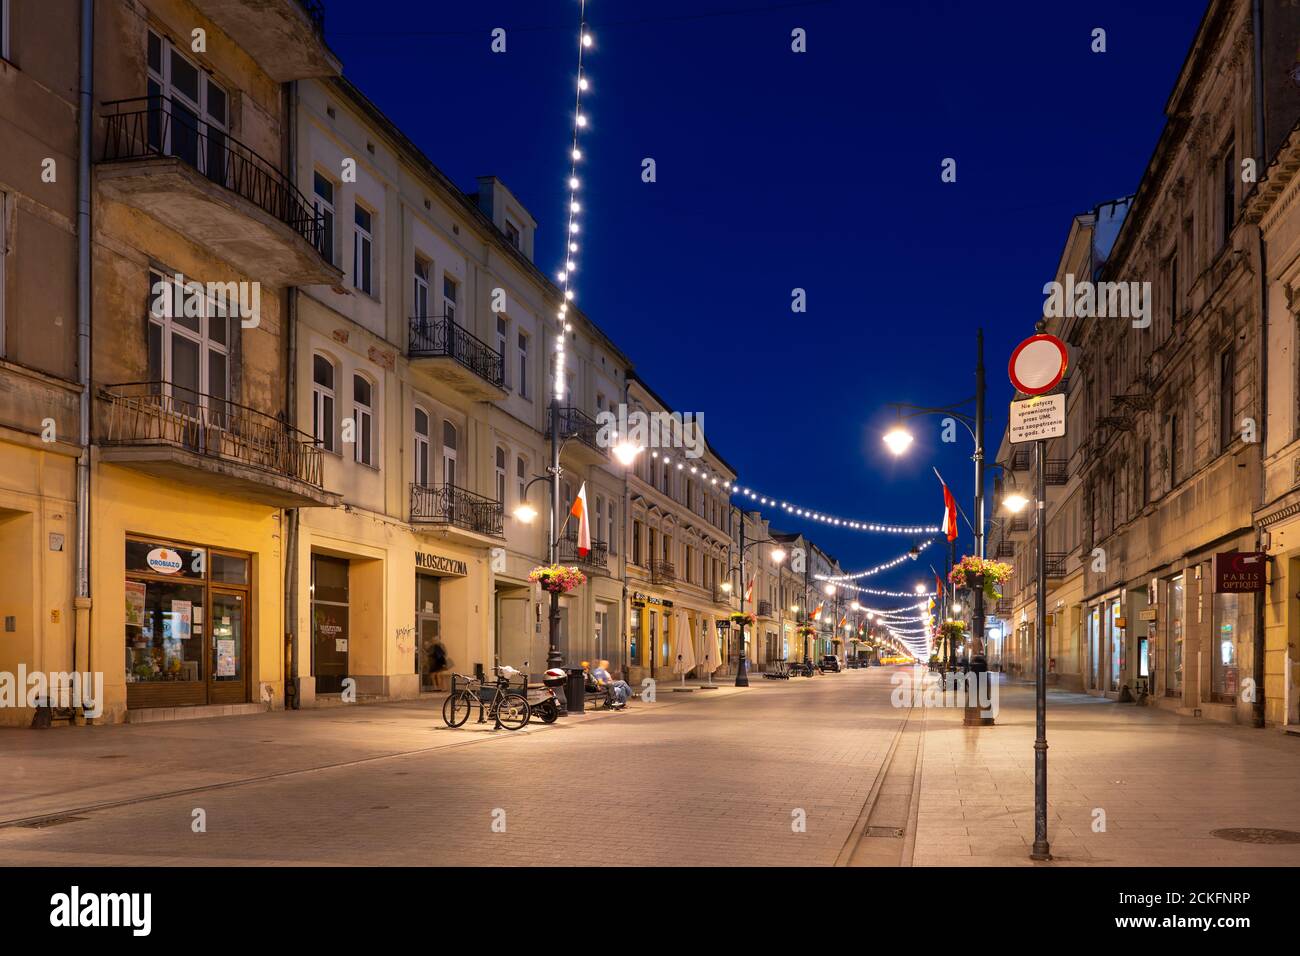 Lodz, Poland - August 5, 2020: Piotrkowska Street at night, city landmark and major tourist attraction Stock Photo